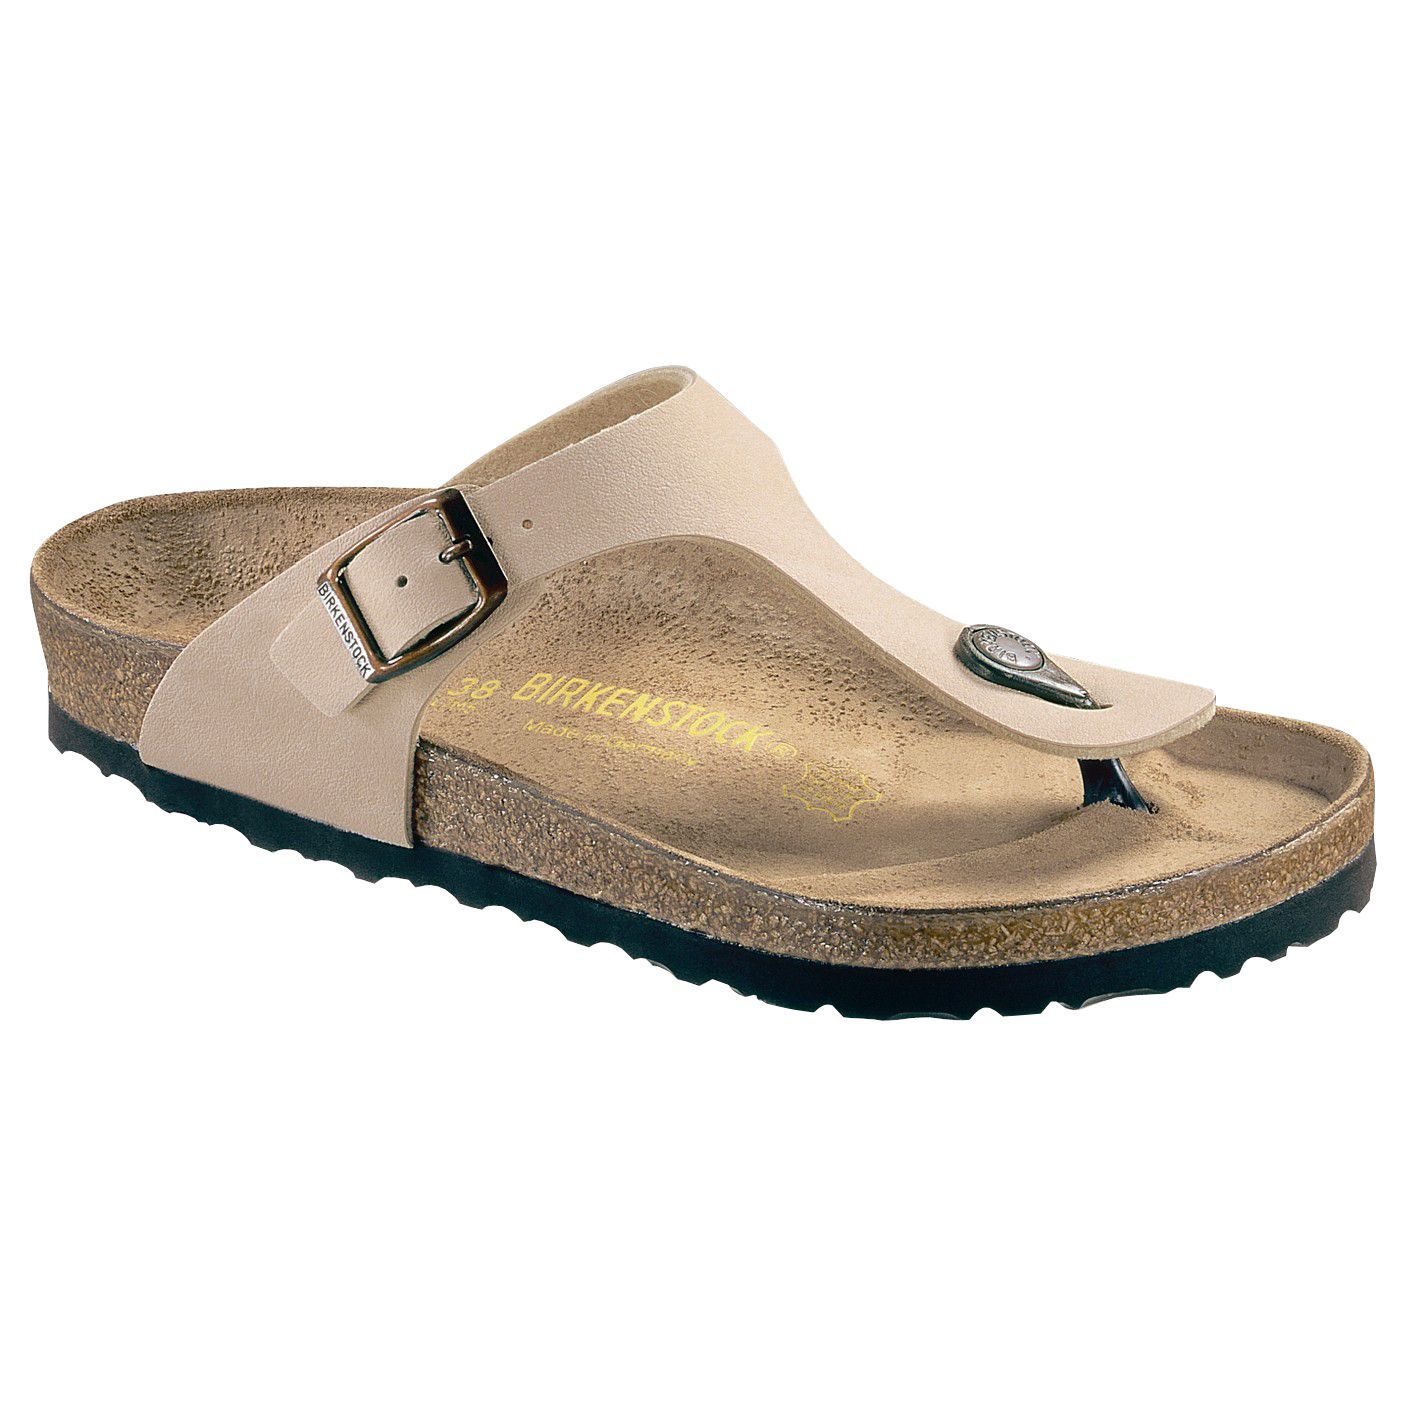 Birkenstock Gizeh Sandals, Ice, Size 7/40